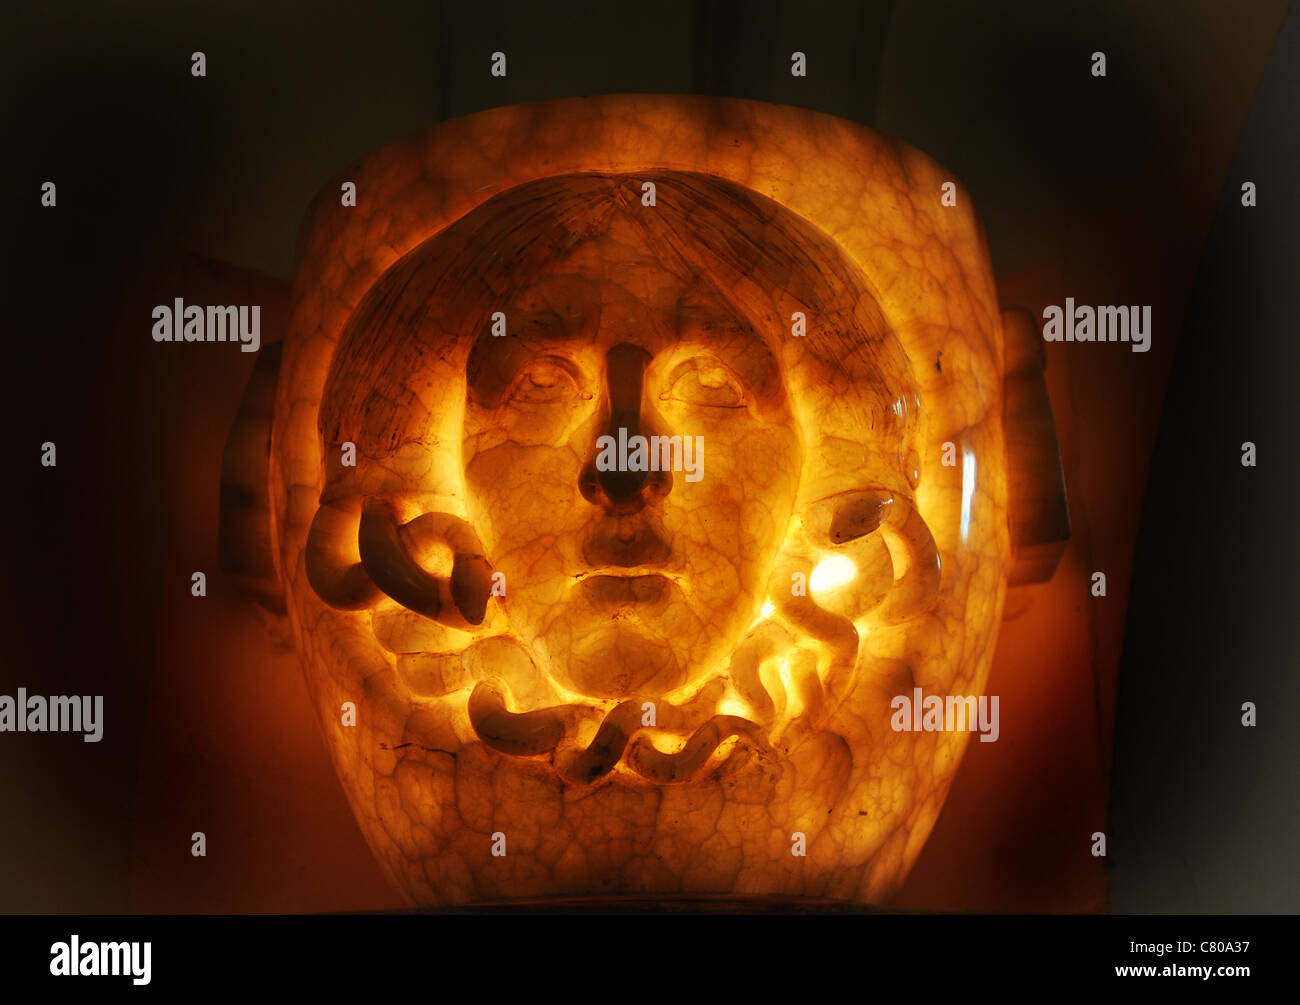 Lampara medusa fotografías e imágenes de alta resolución - Alamy